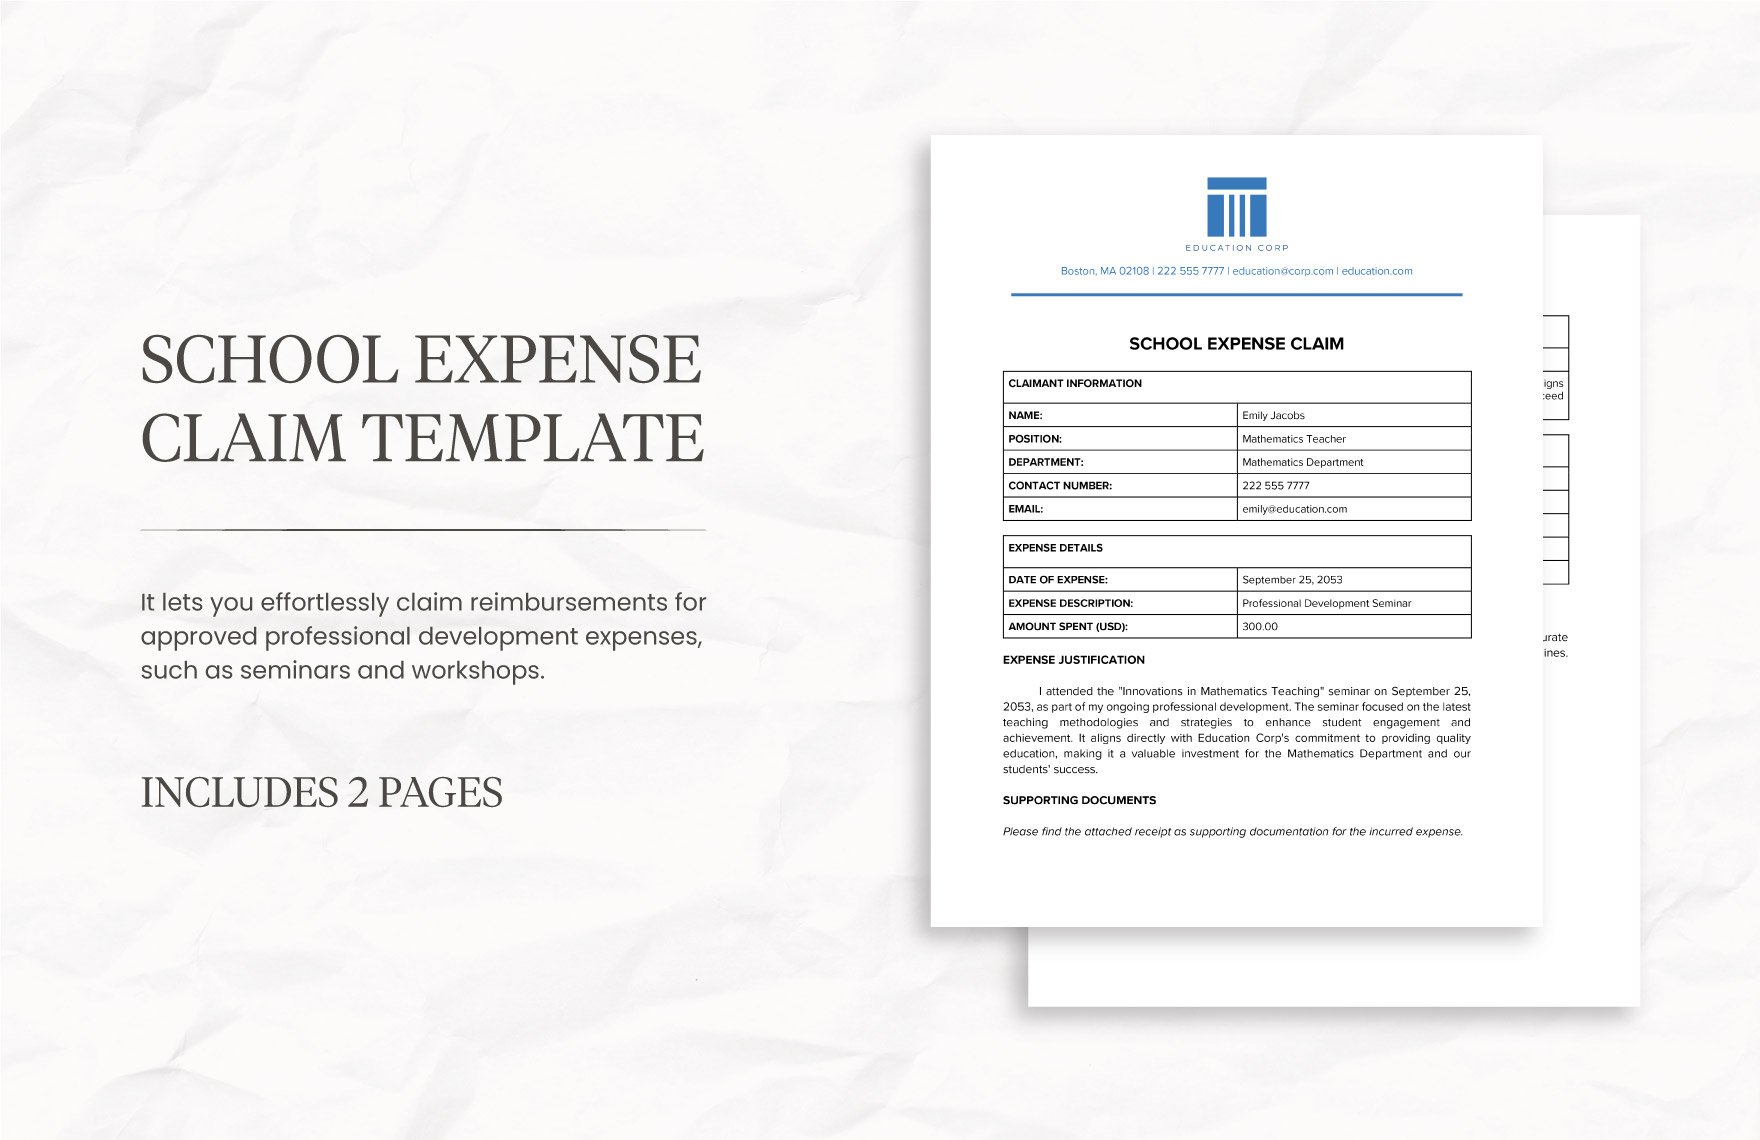 School Expense Claim Template in Word, Google Docs, PDF